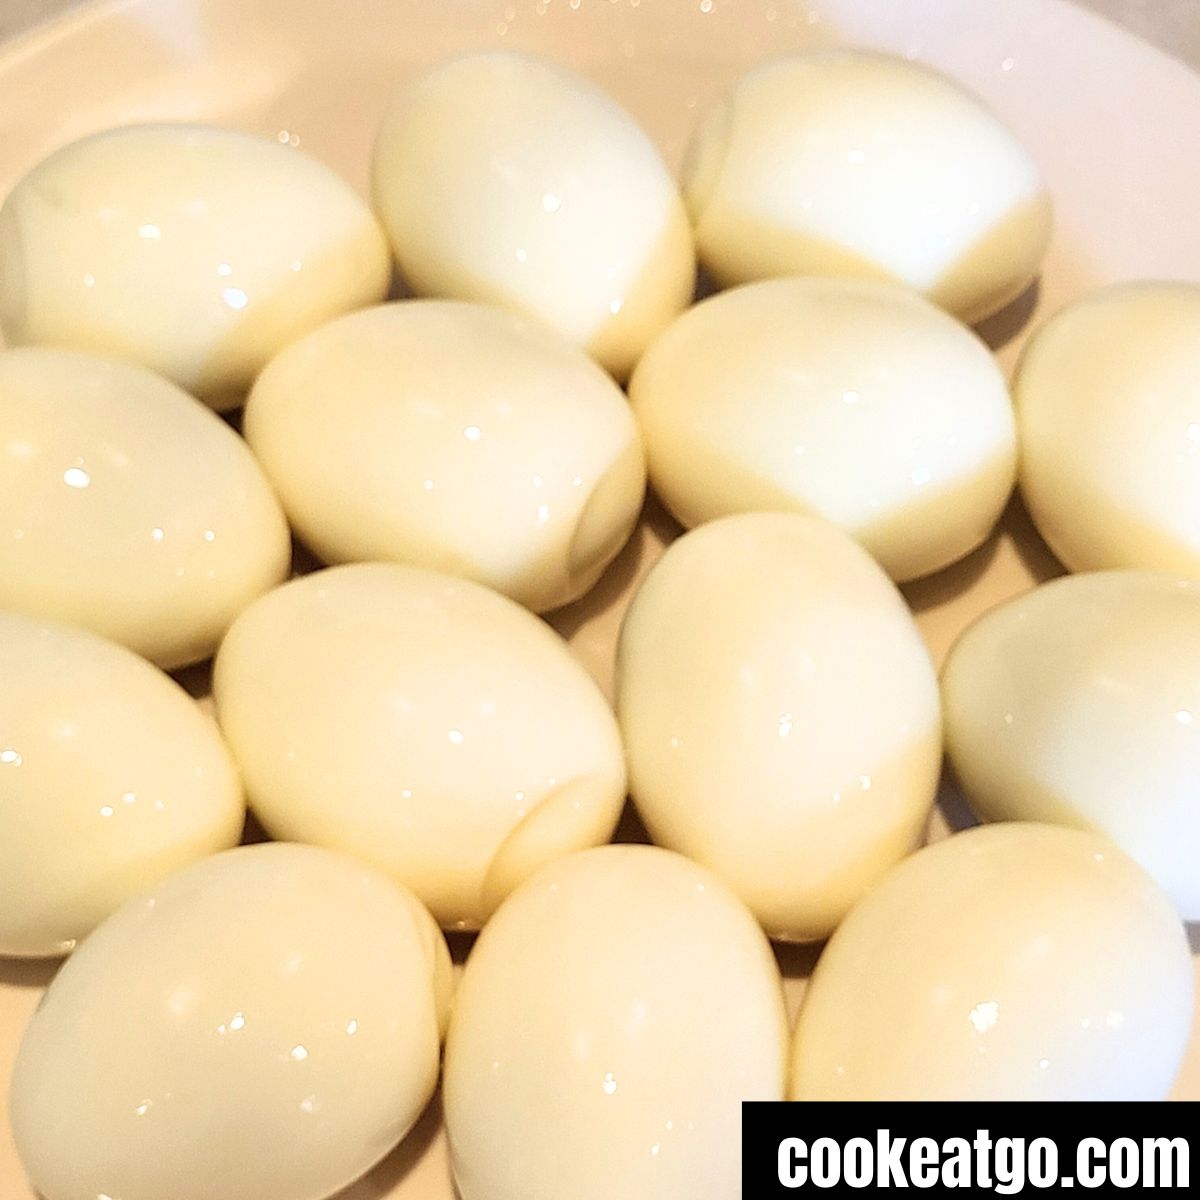 peeled hard boiled eggs on white plate